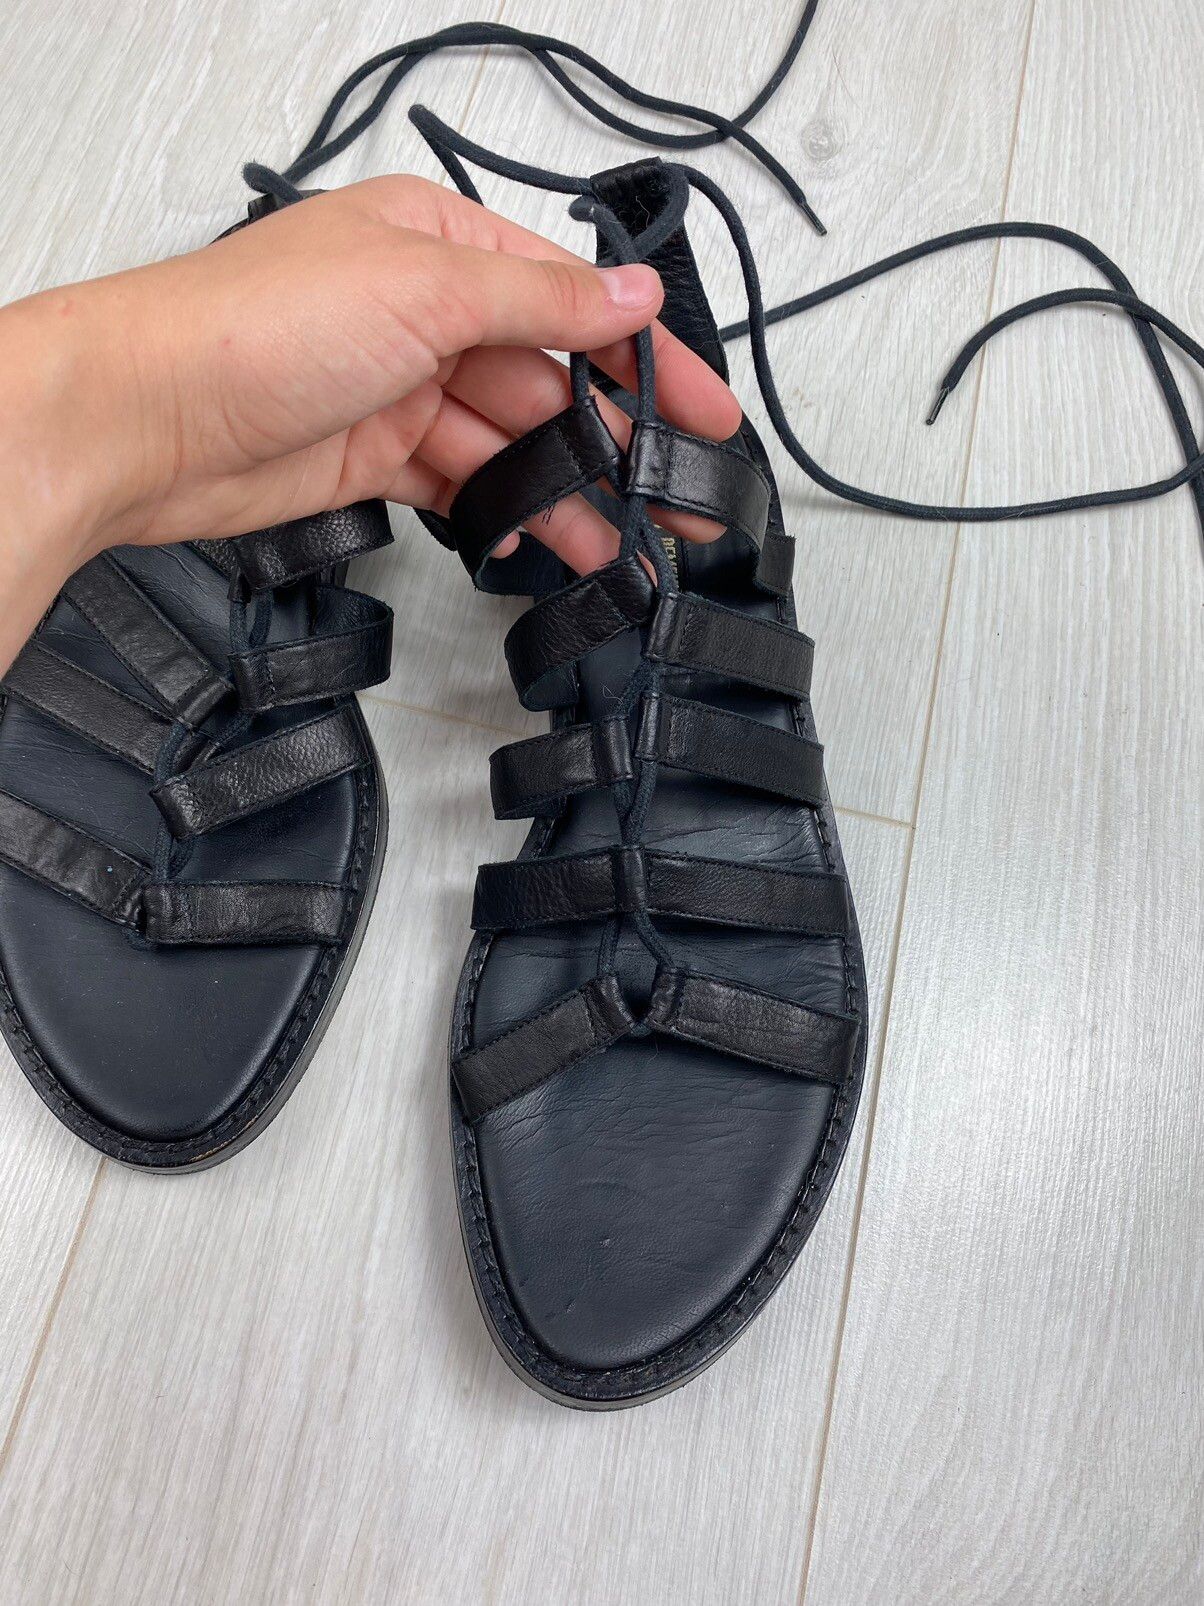 Vintage Ann Demeulemeester Leather Flat Gladiator Sandals High Size US 9 / EU 42 - 3 Thumbnail